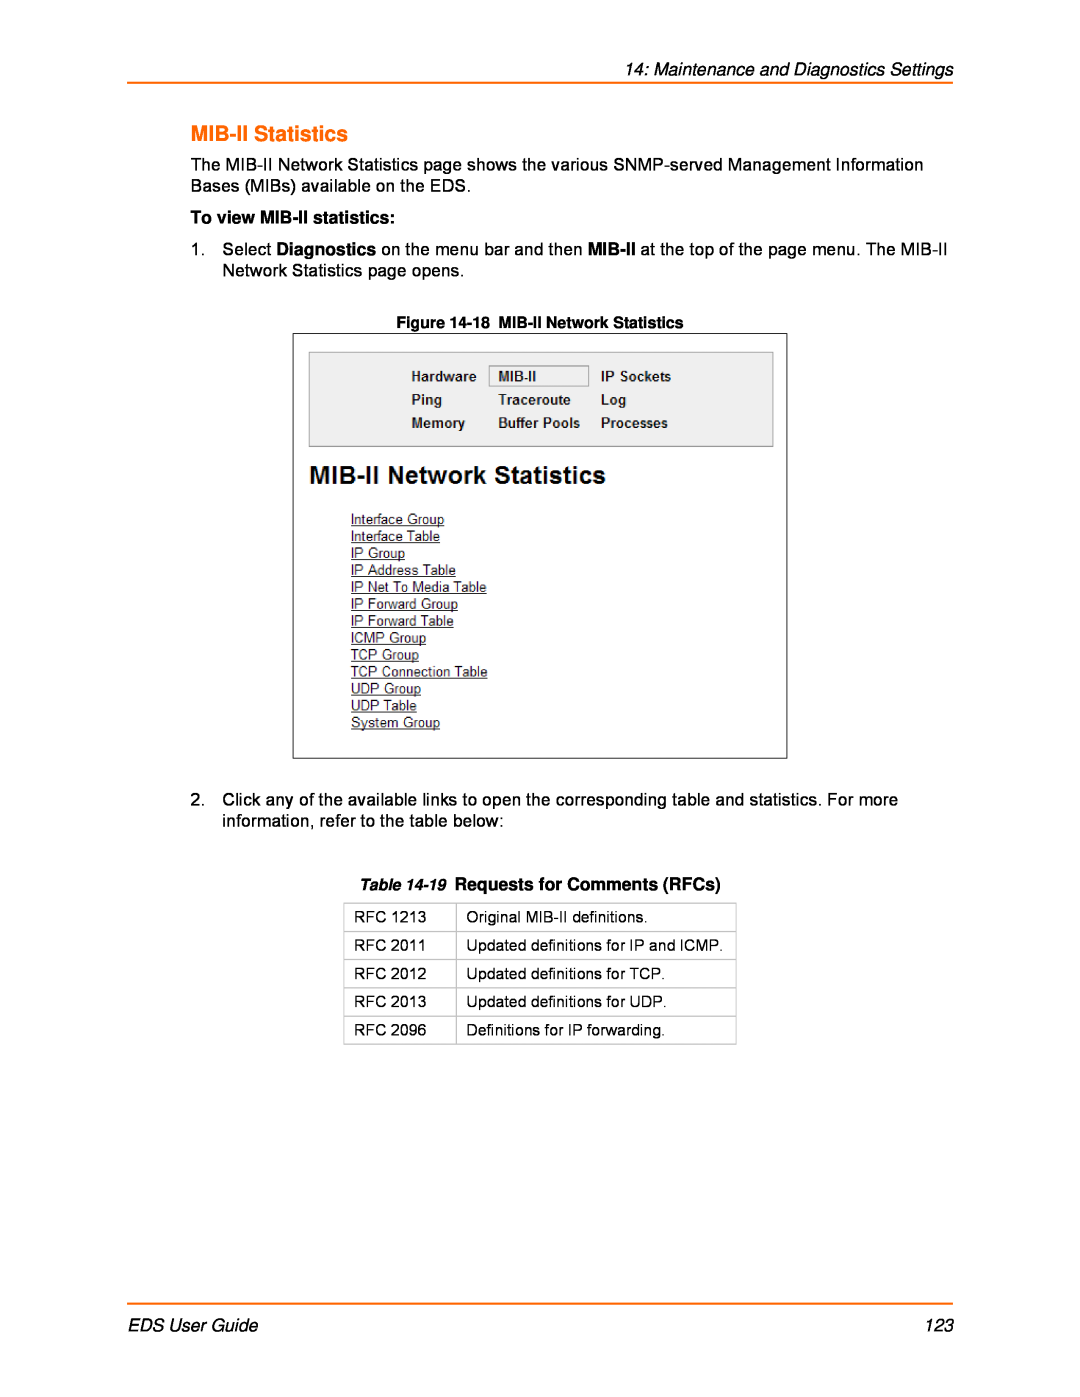 Lantronix EDS8PR manual MIB-II Statistics, Maintenance and Diagnostics Settings, To view MIB-II statistics, EDS User Guide 